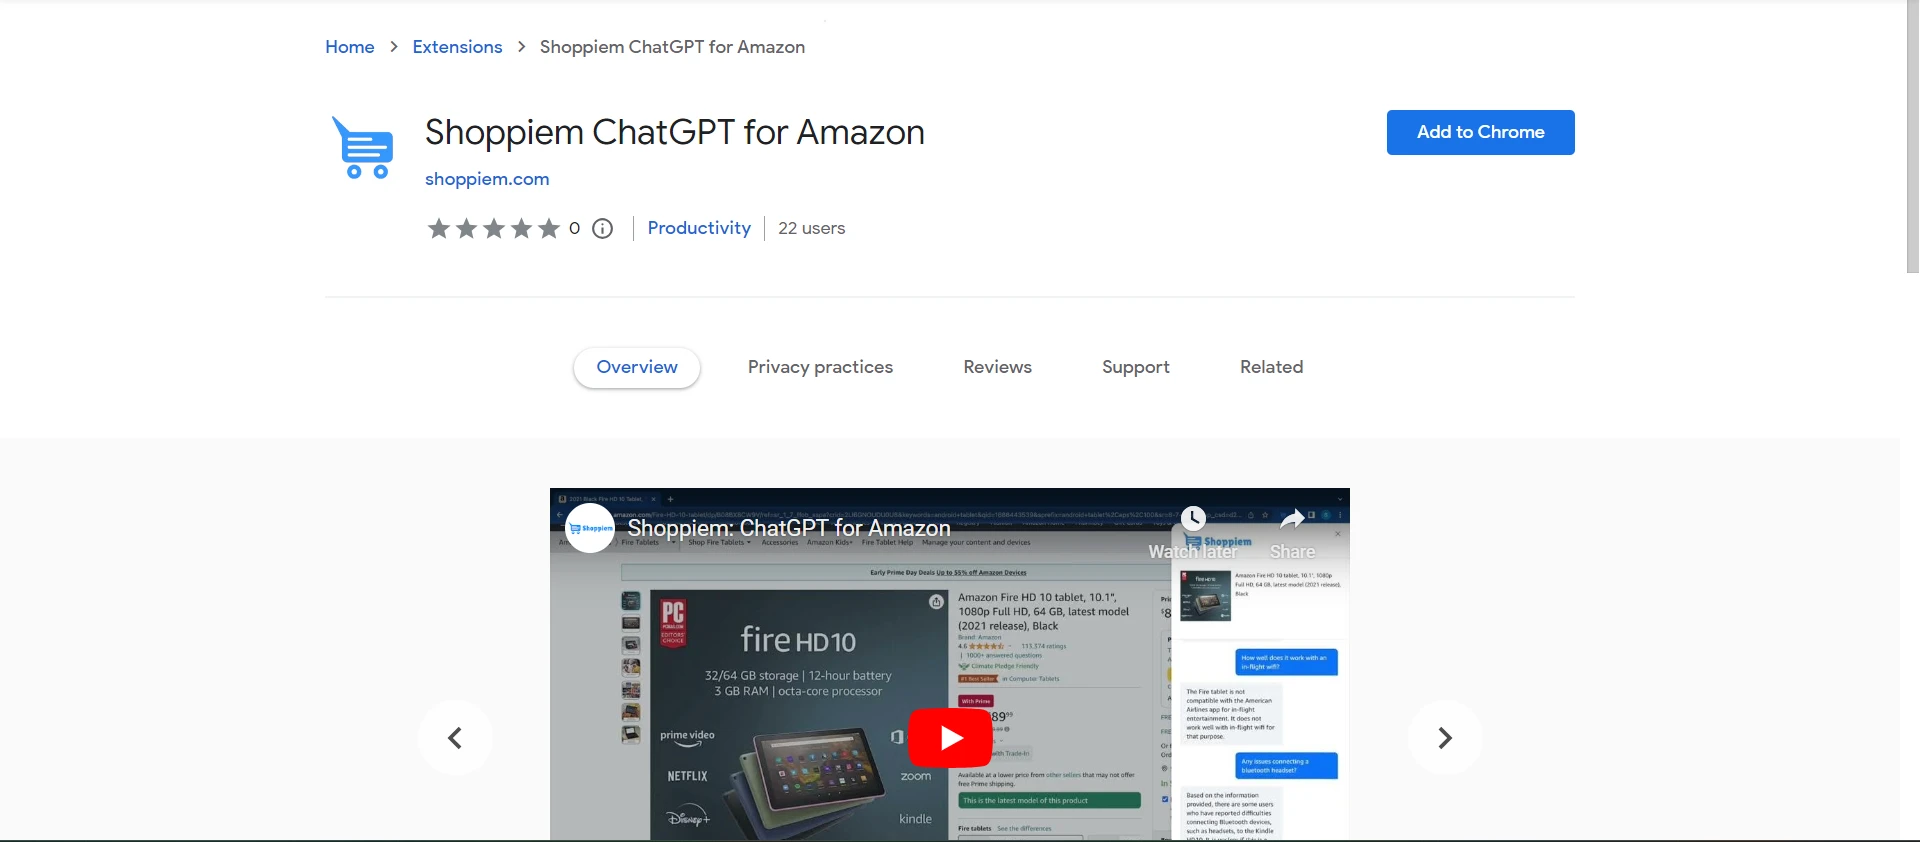 Shoppiem ChatGPT for Amazonwebsite picture